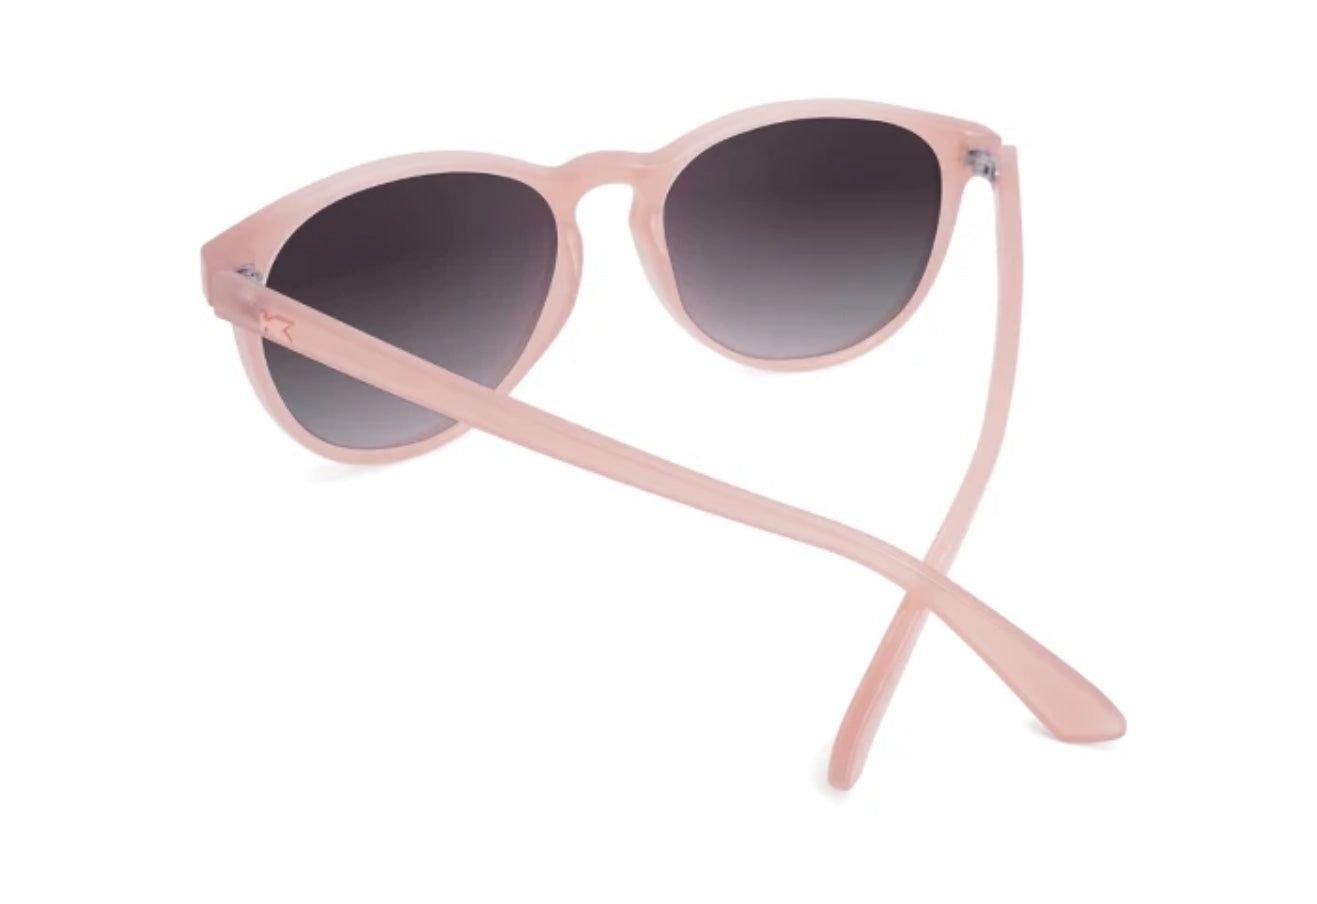 Unisex Sunglasses Mai Tais Vintage Rose Polarized Lens